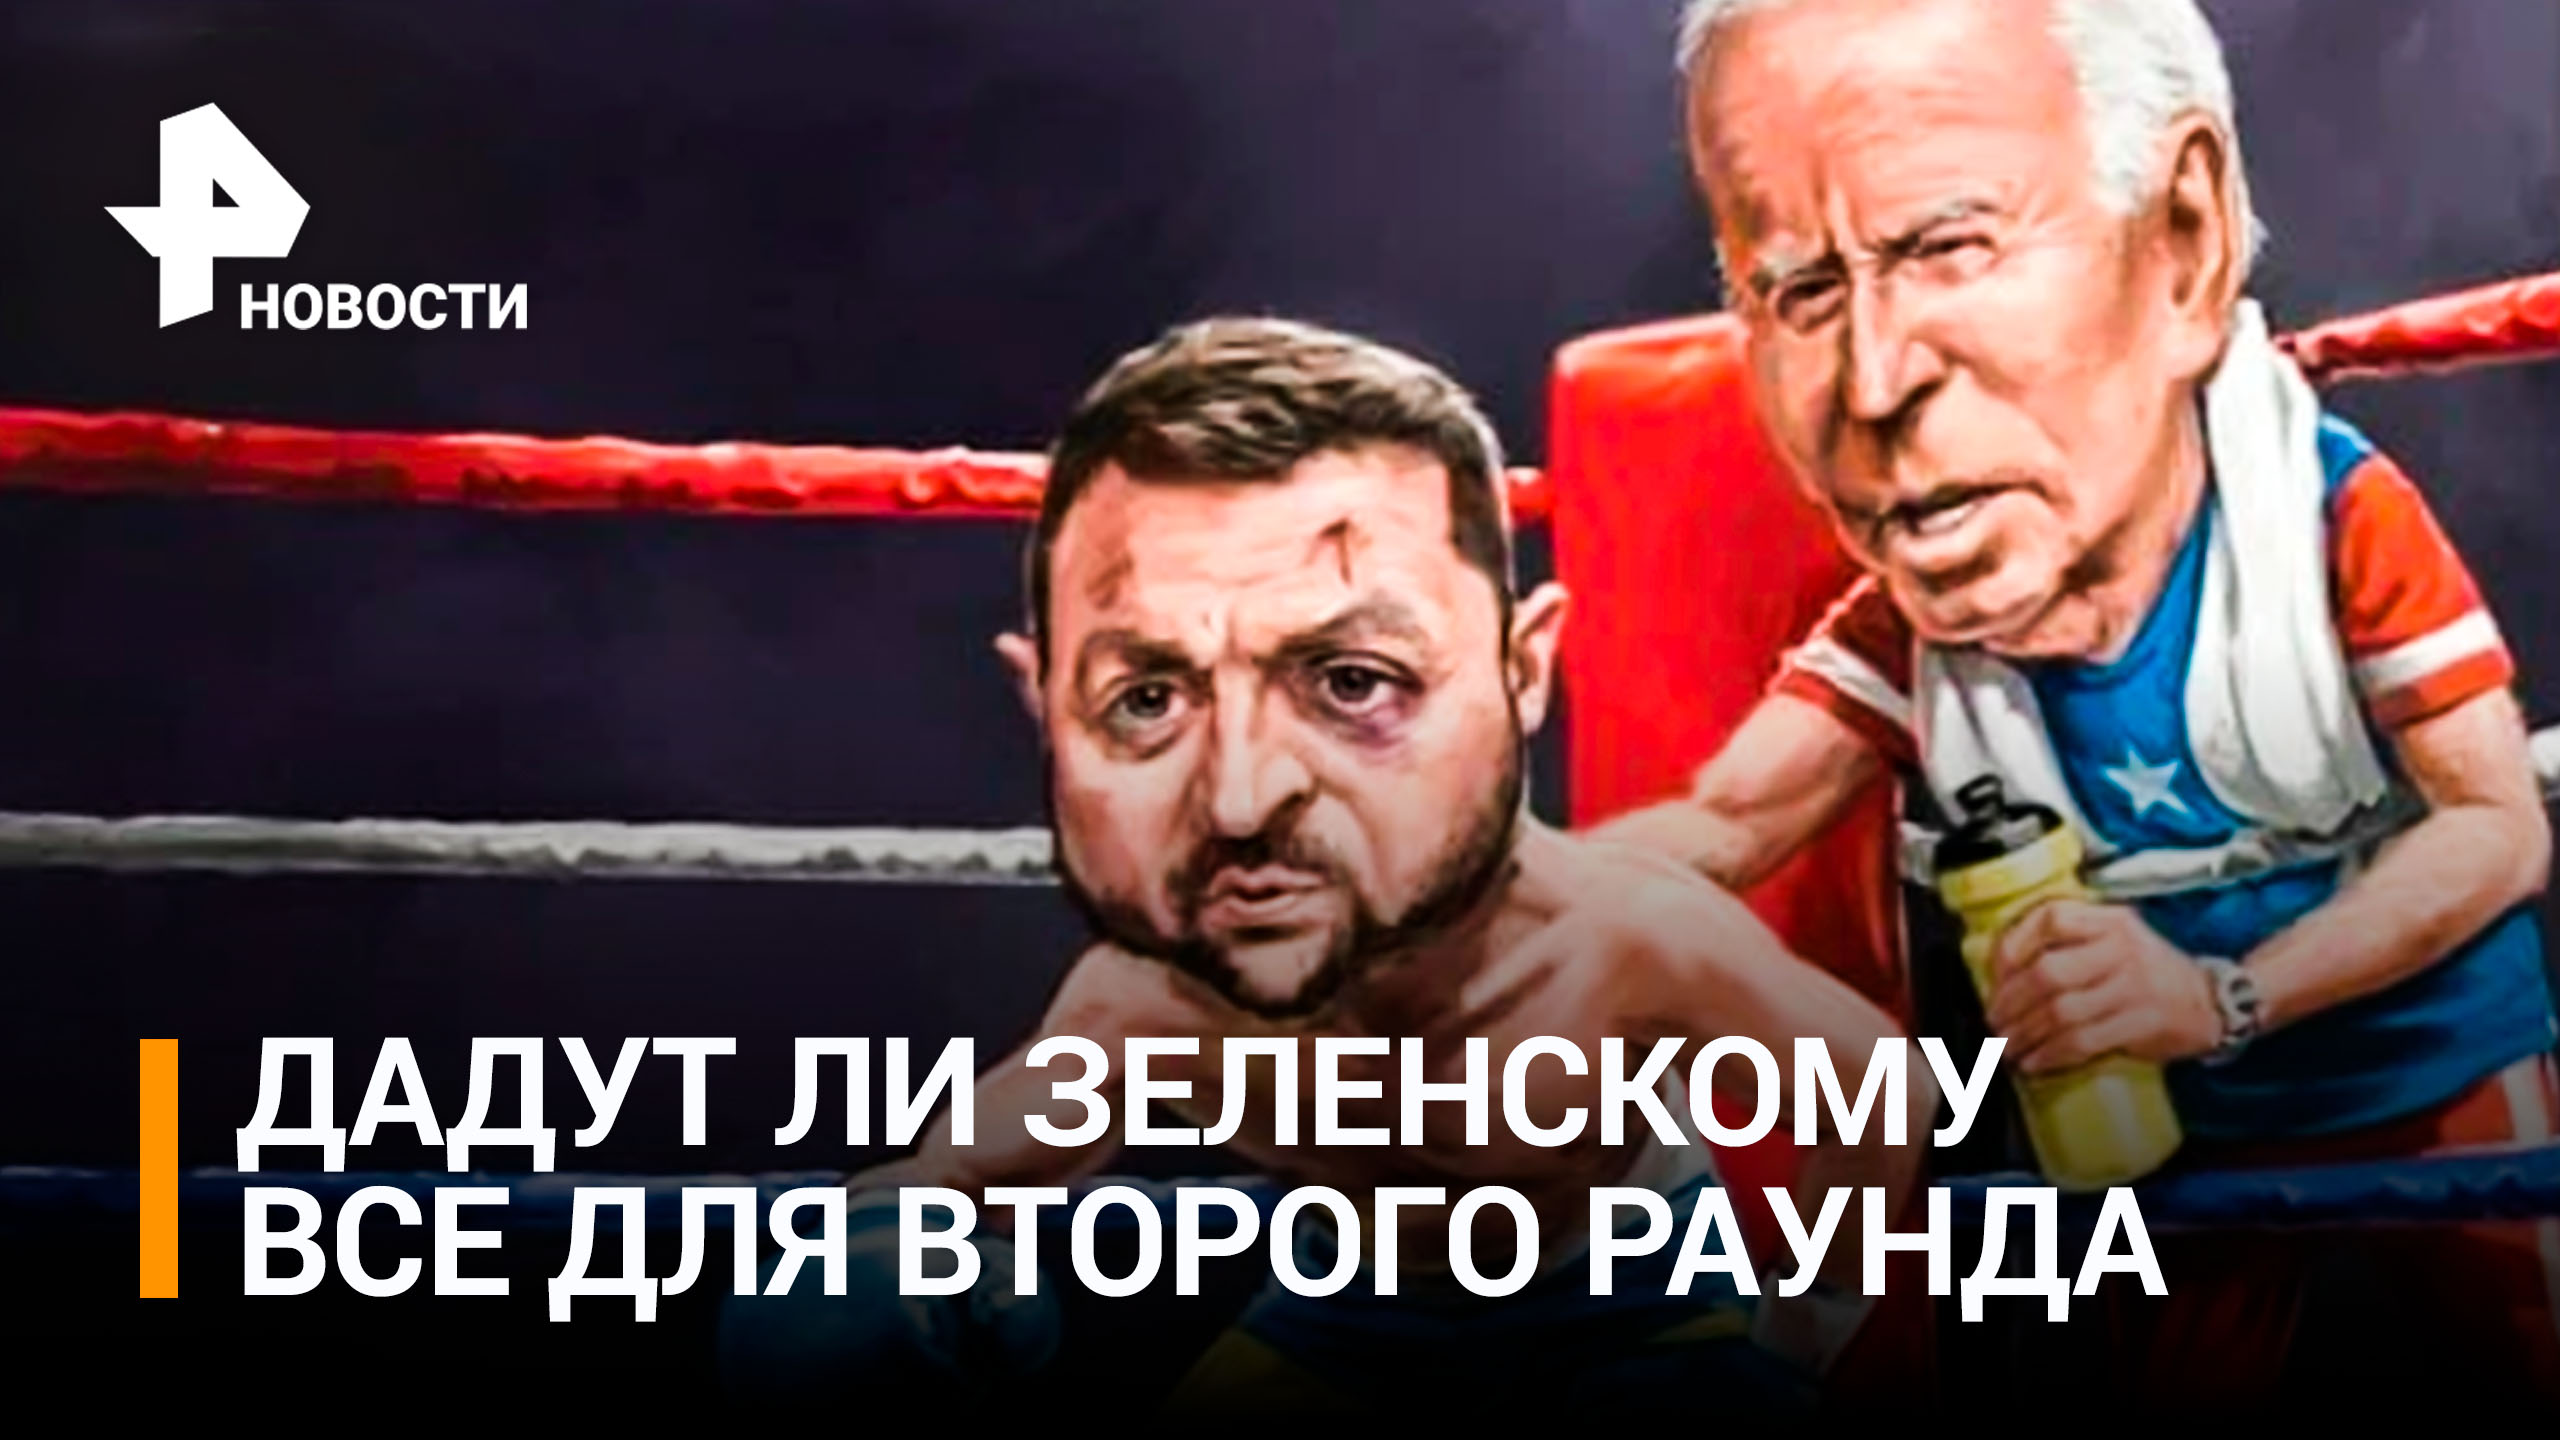 Байдена и Зеленского изобразили на боксерском ринге на обложке The Week / РЕН Новости